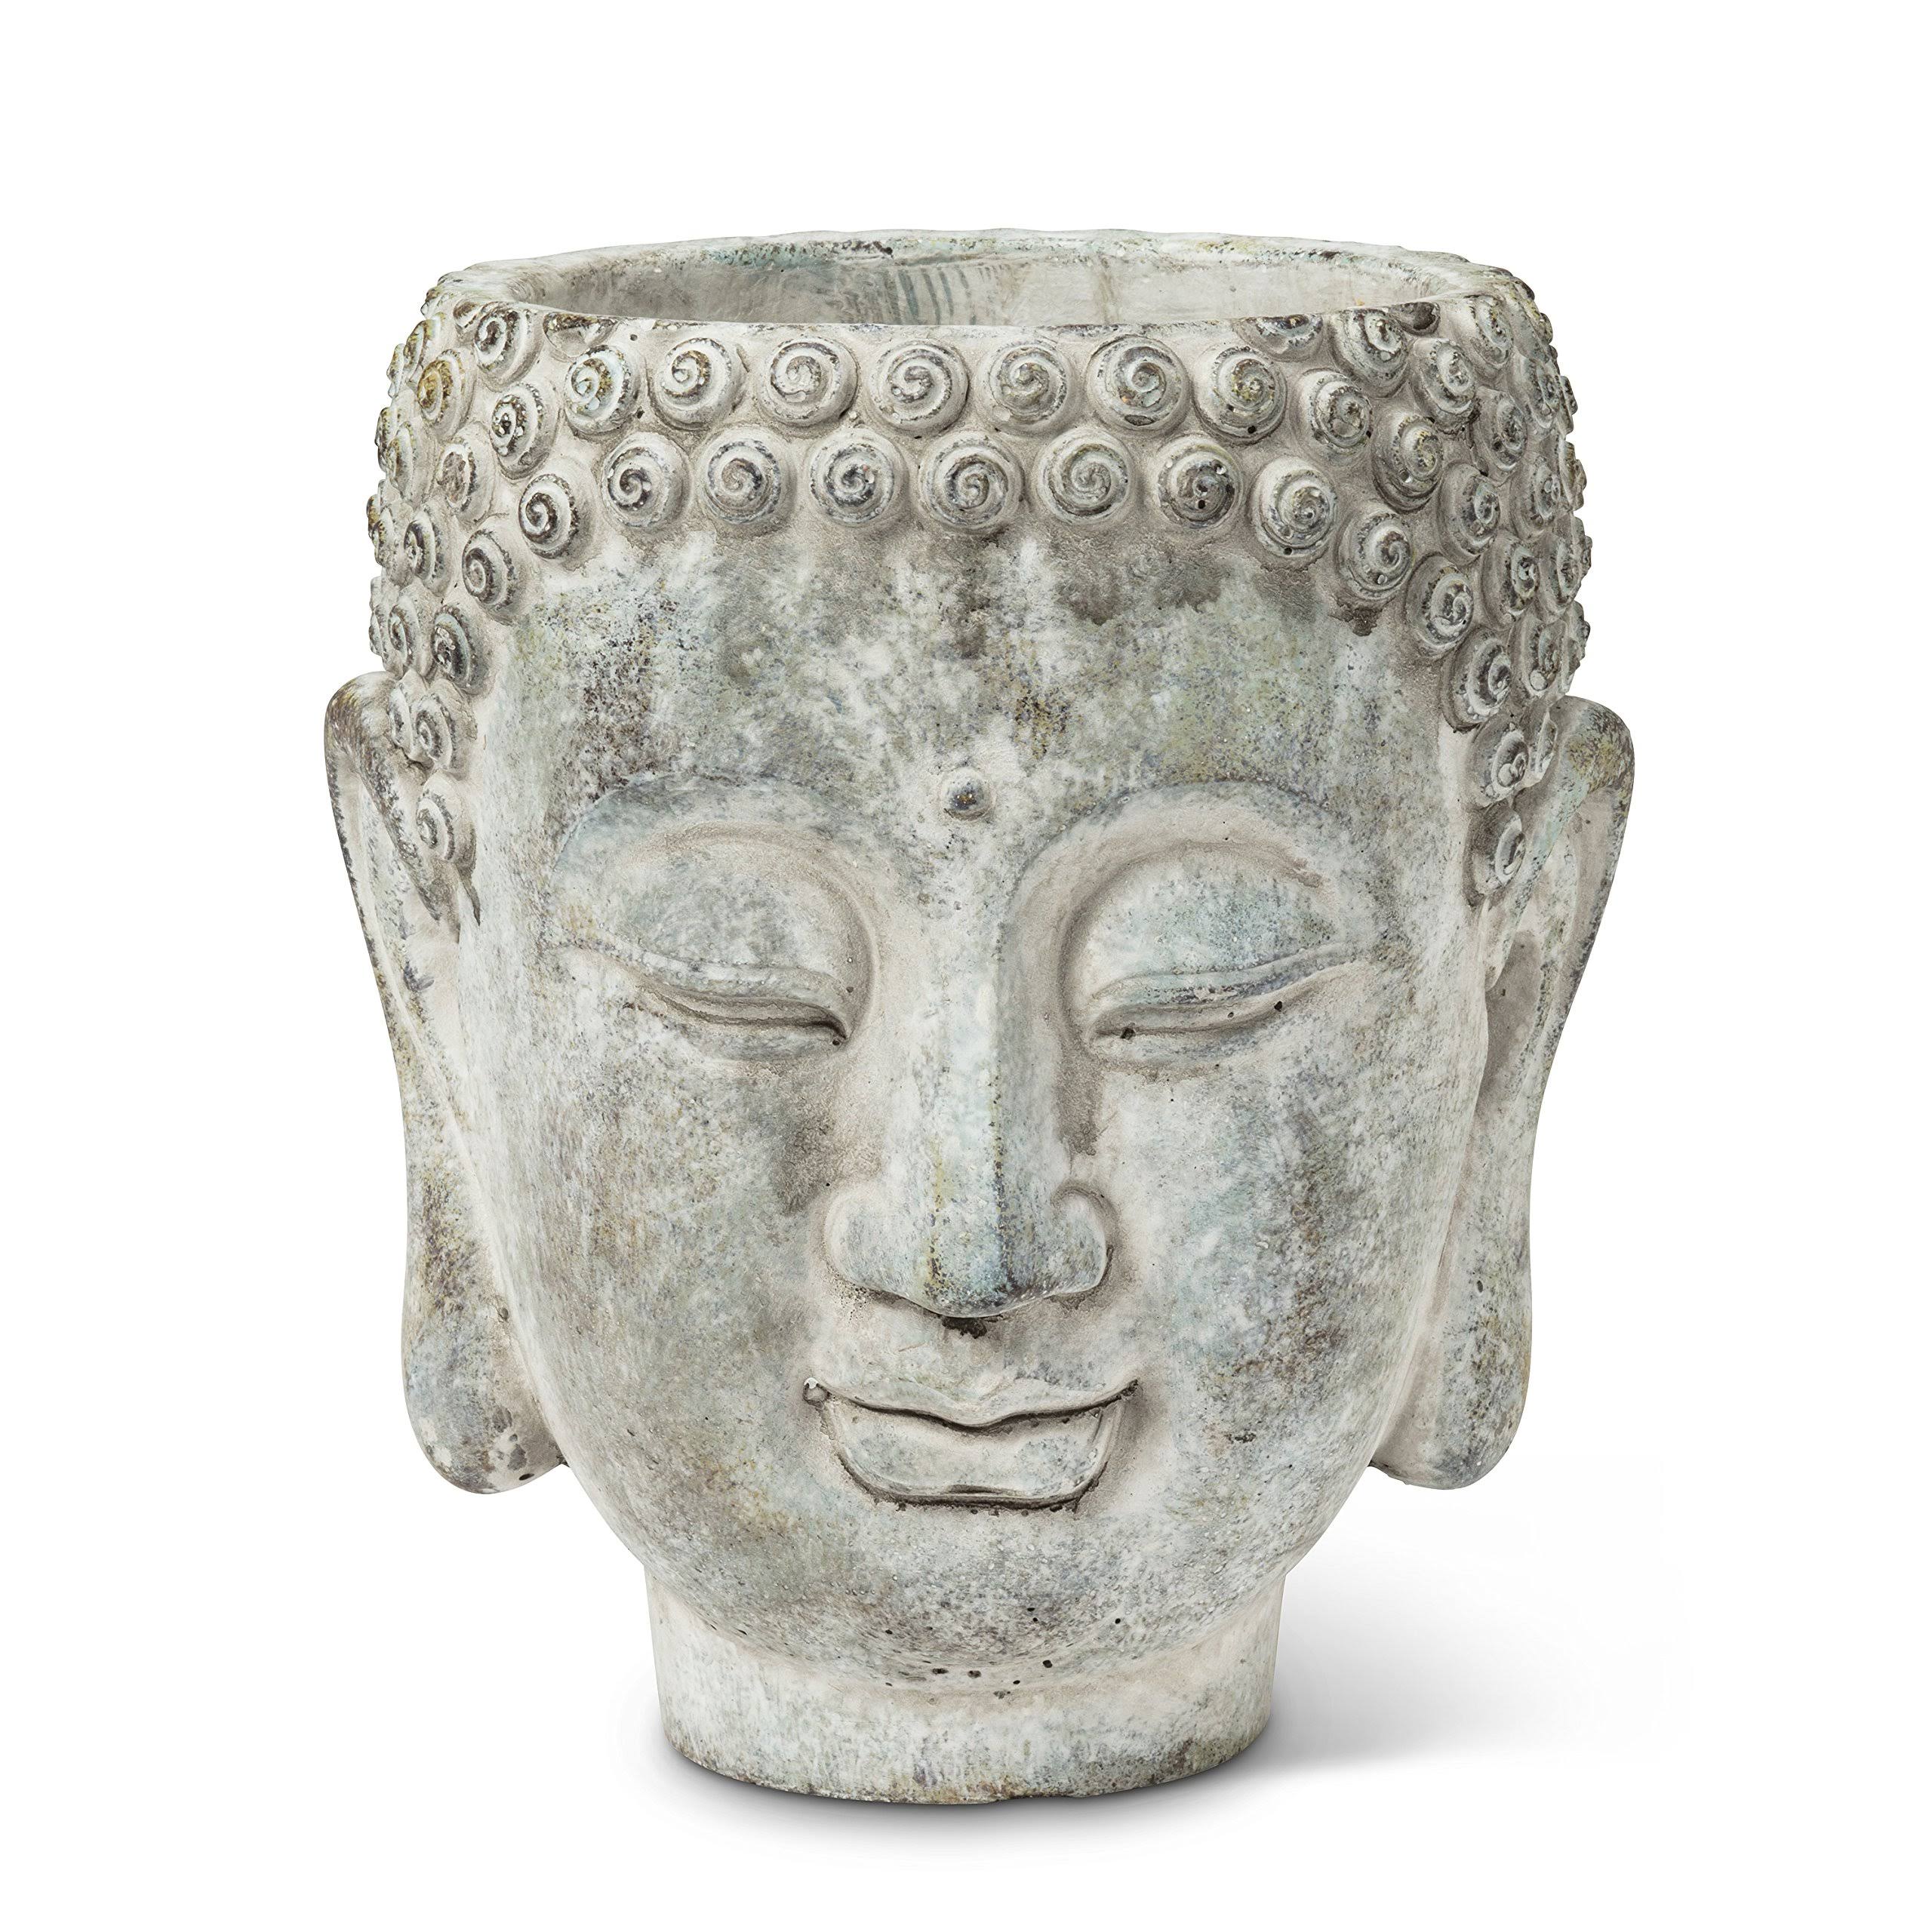 Abbott Collection 27-DHARMA/350 LG Large Buddha Head Planter, Grey